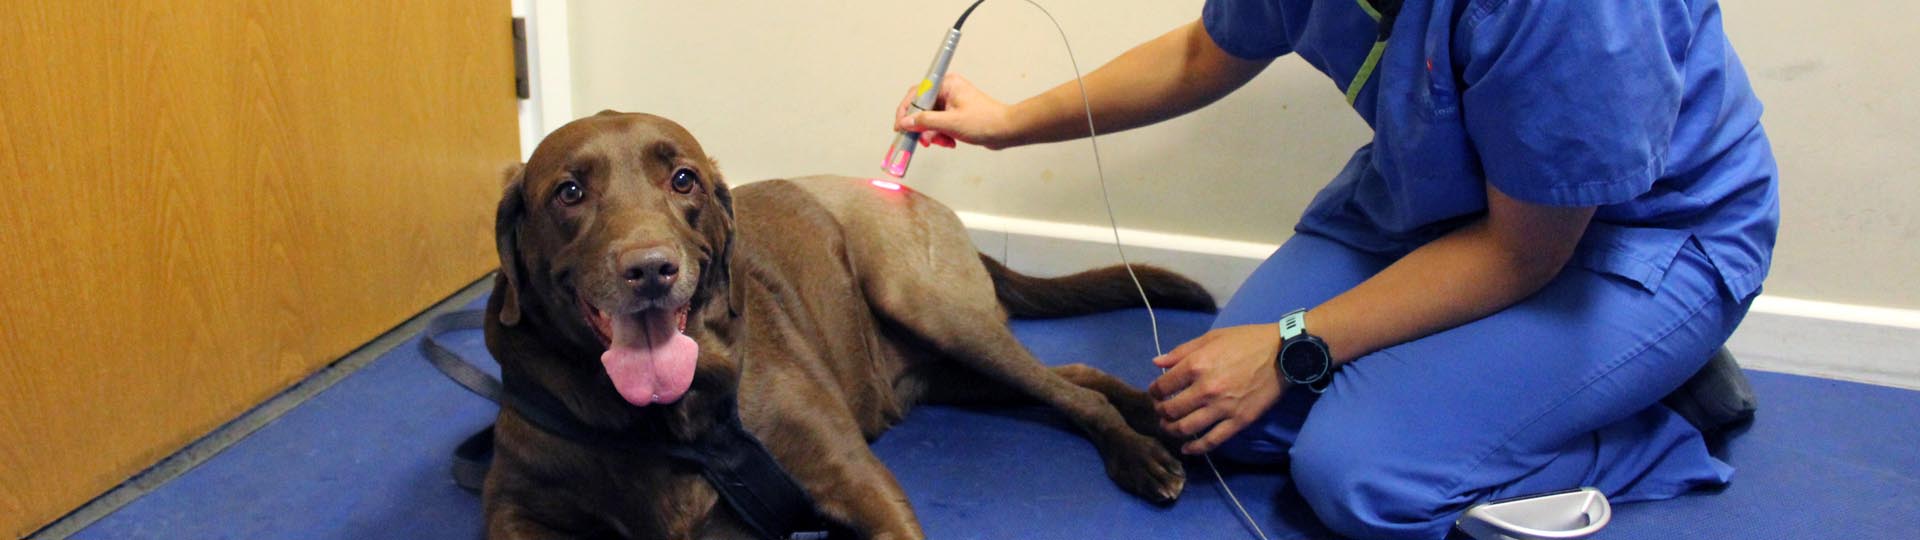 Labrador having laser treatment